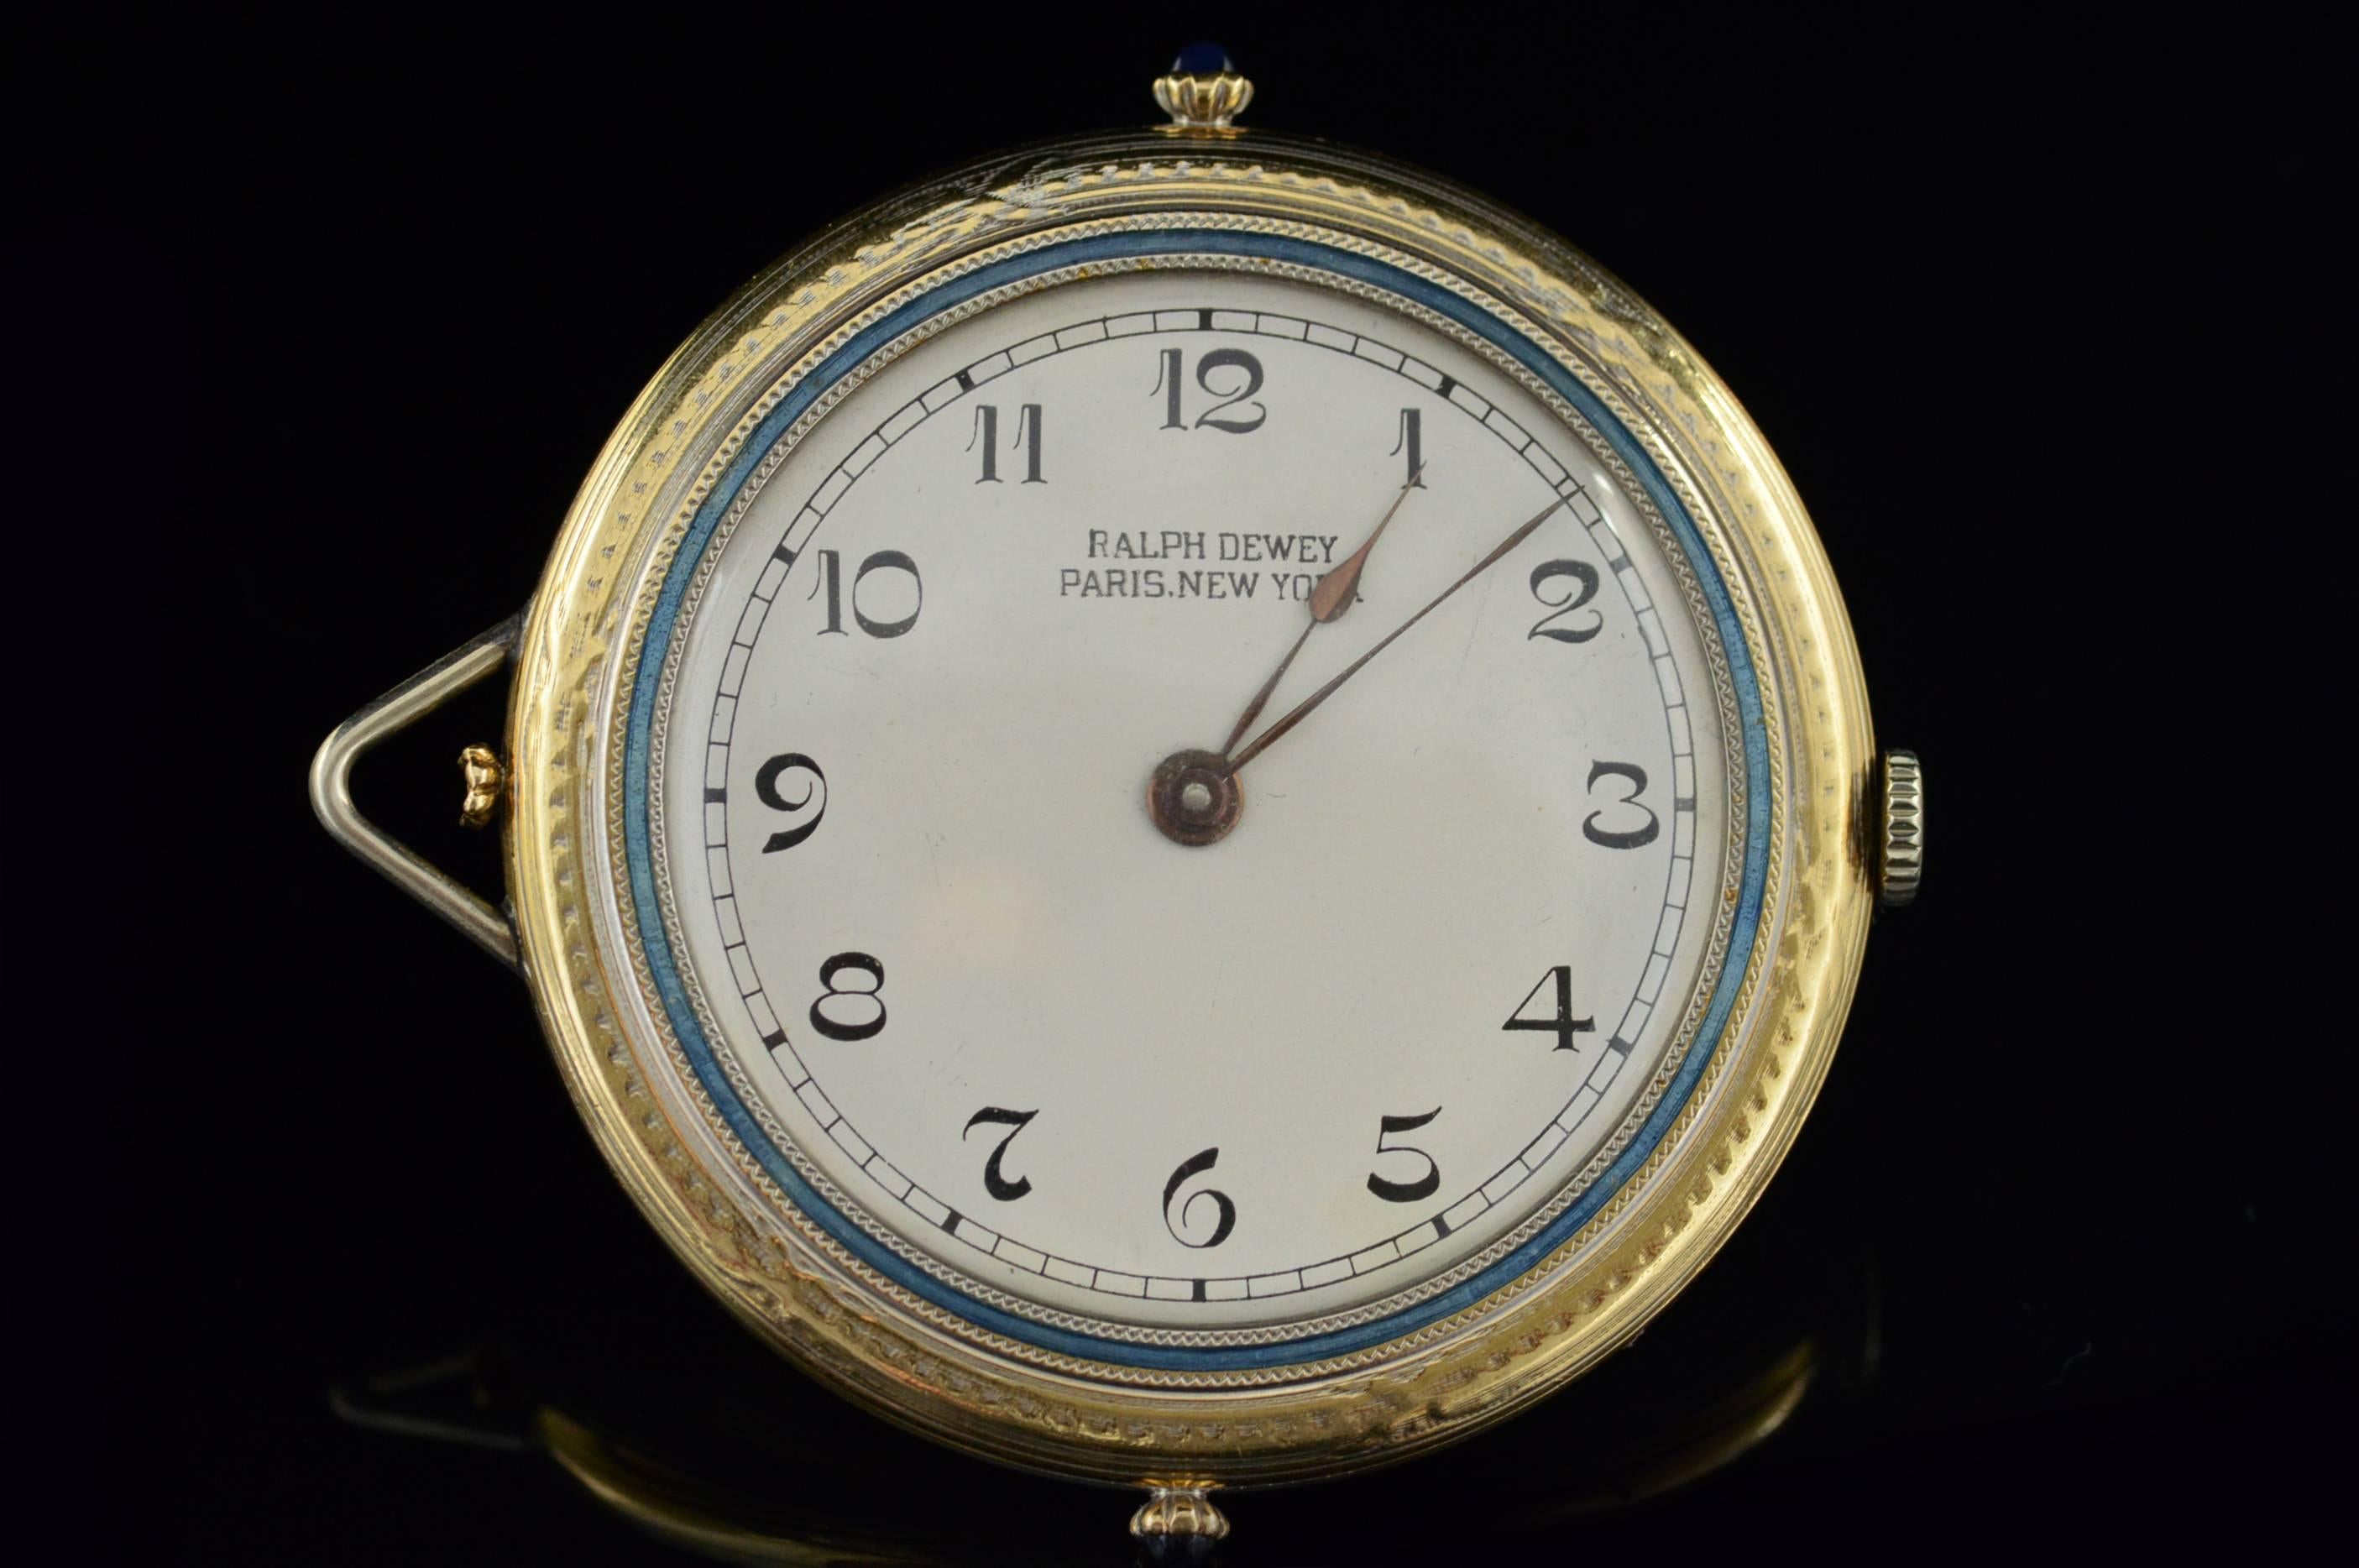 ·Item: 14K Ralph Dewey Paris New York Blue Enamel Pocket Watch Yellow Gold

·Era: 1920s

·Composition: 14k Gold Marked/Tested

·Condition: Estate - Excellent

·Weight: 51.1g